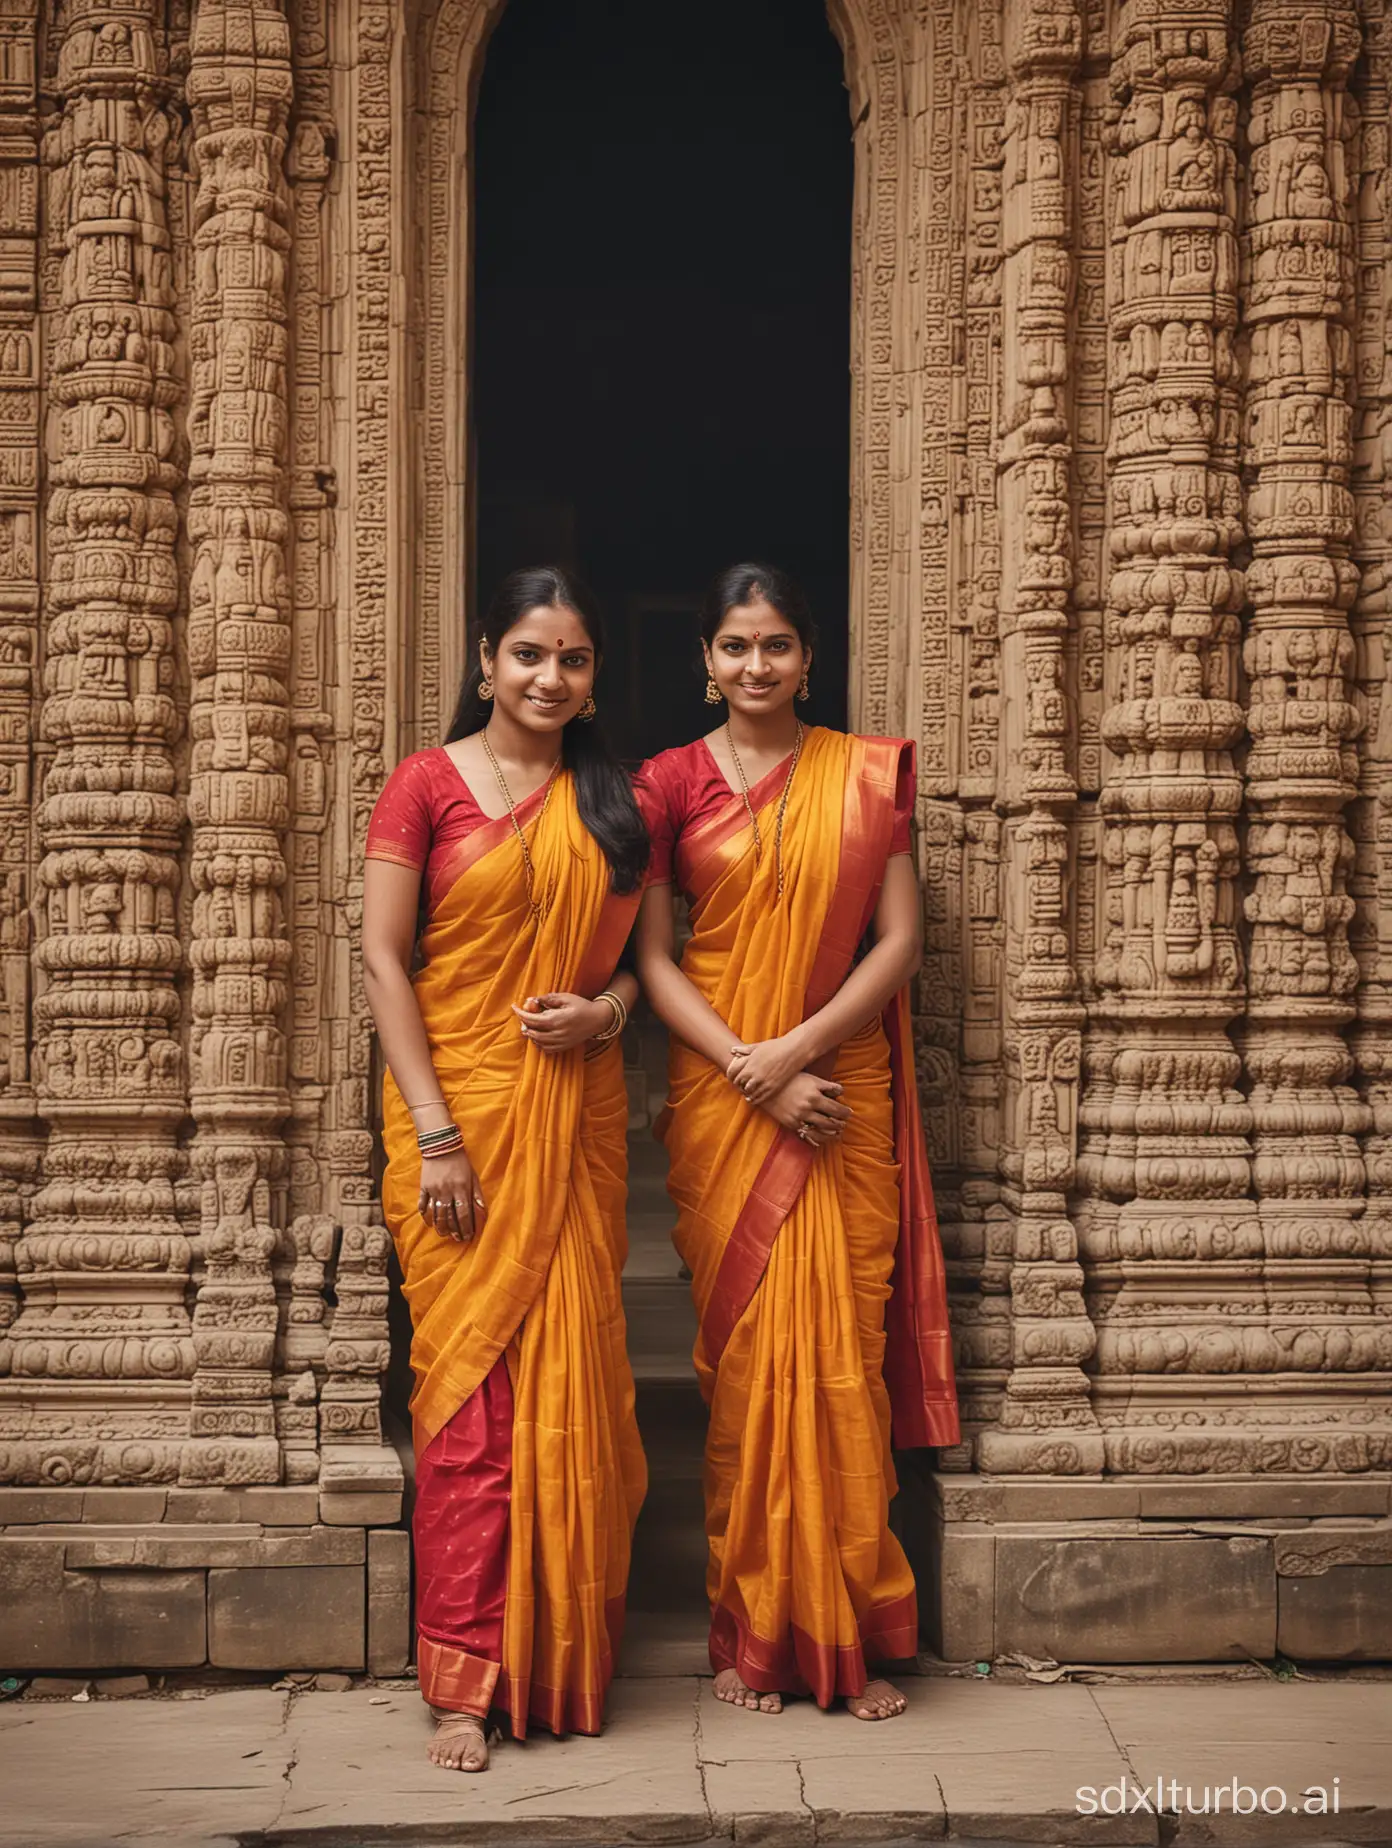 Indian women in temple